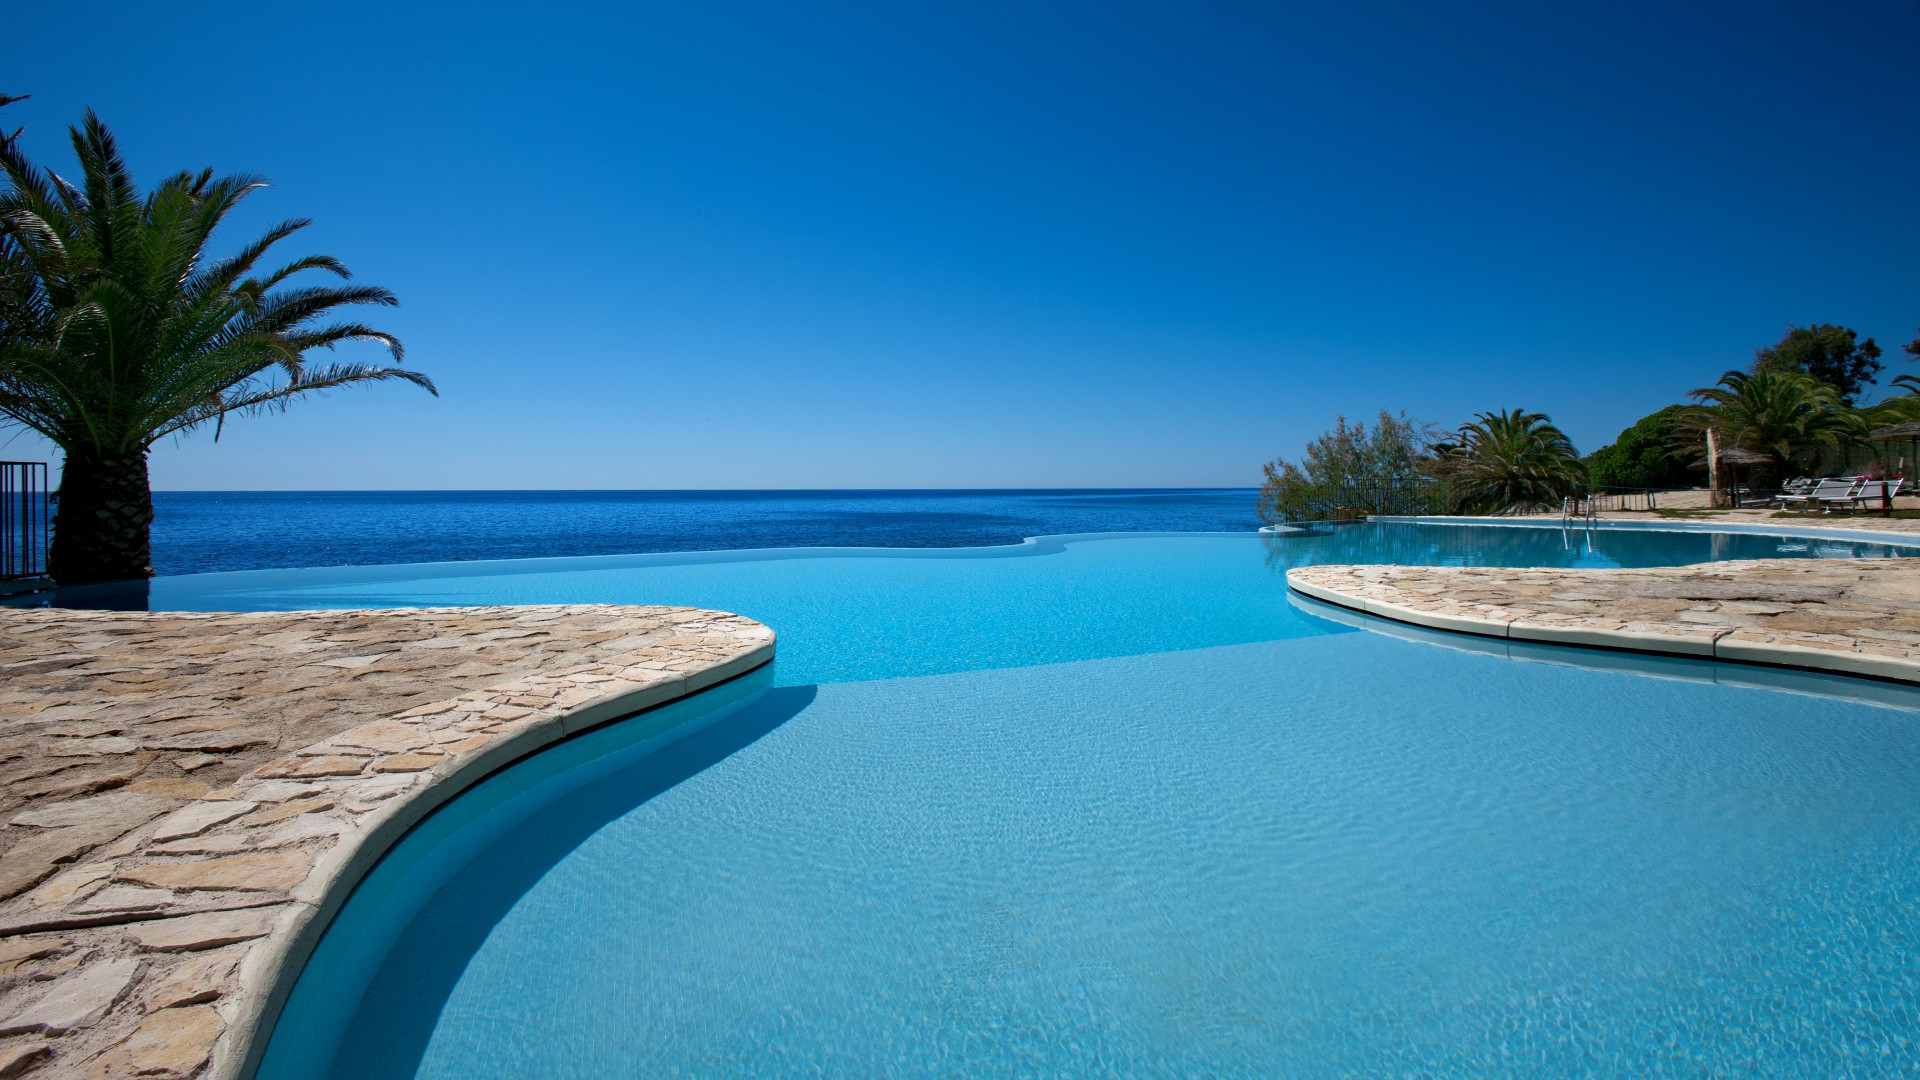 Costa dei Fiori, Sardinia, Italy, The best hotel pools 2017, tourism, travel, resort, vacation, pool, sea, sky, blue (horizontal)